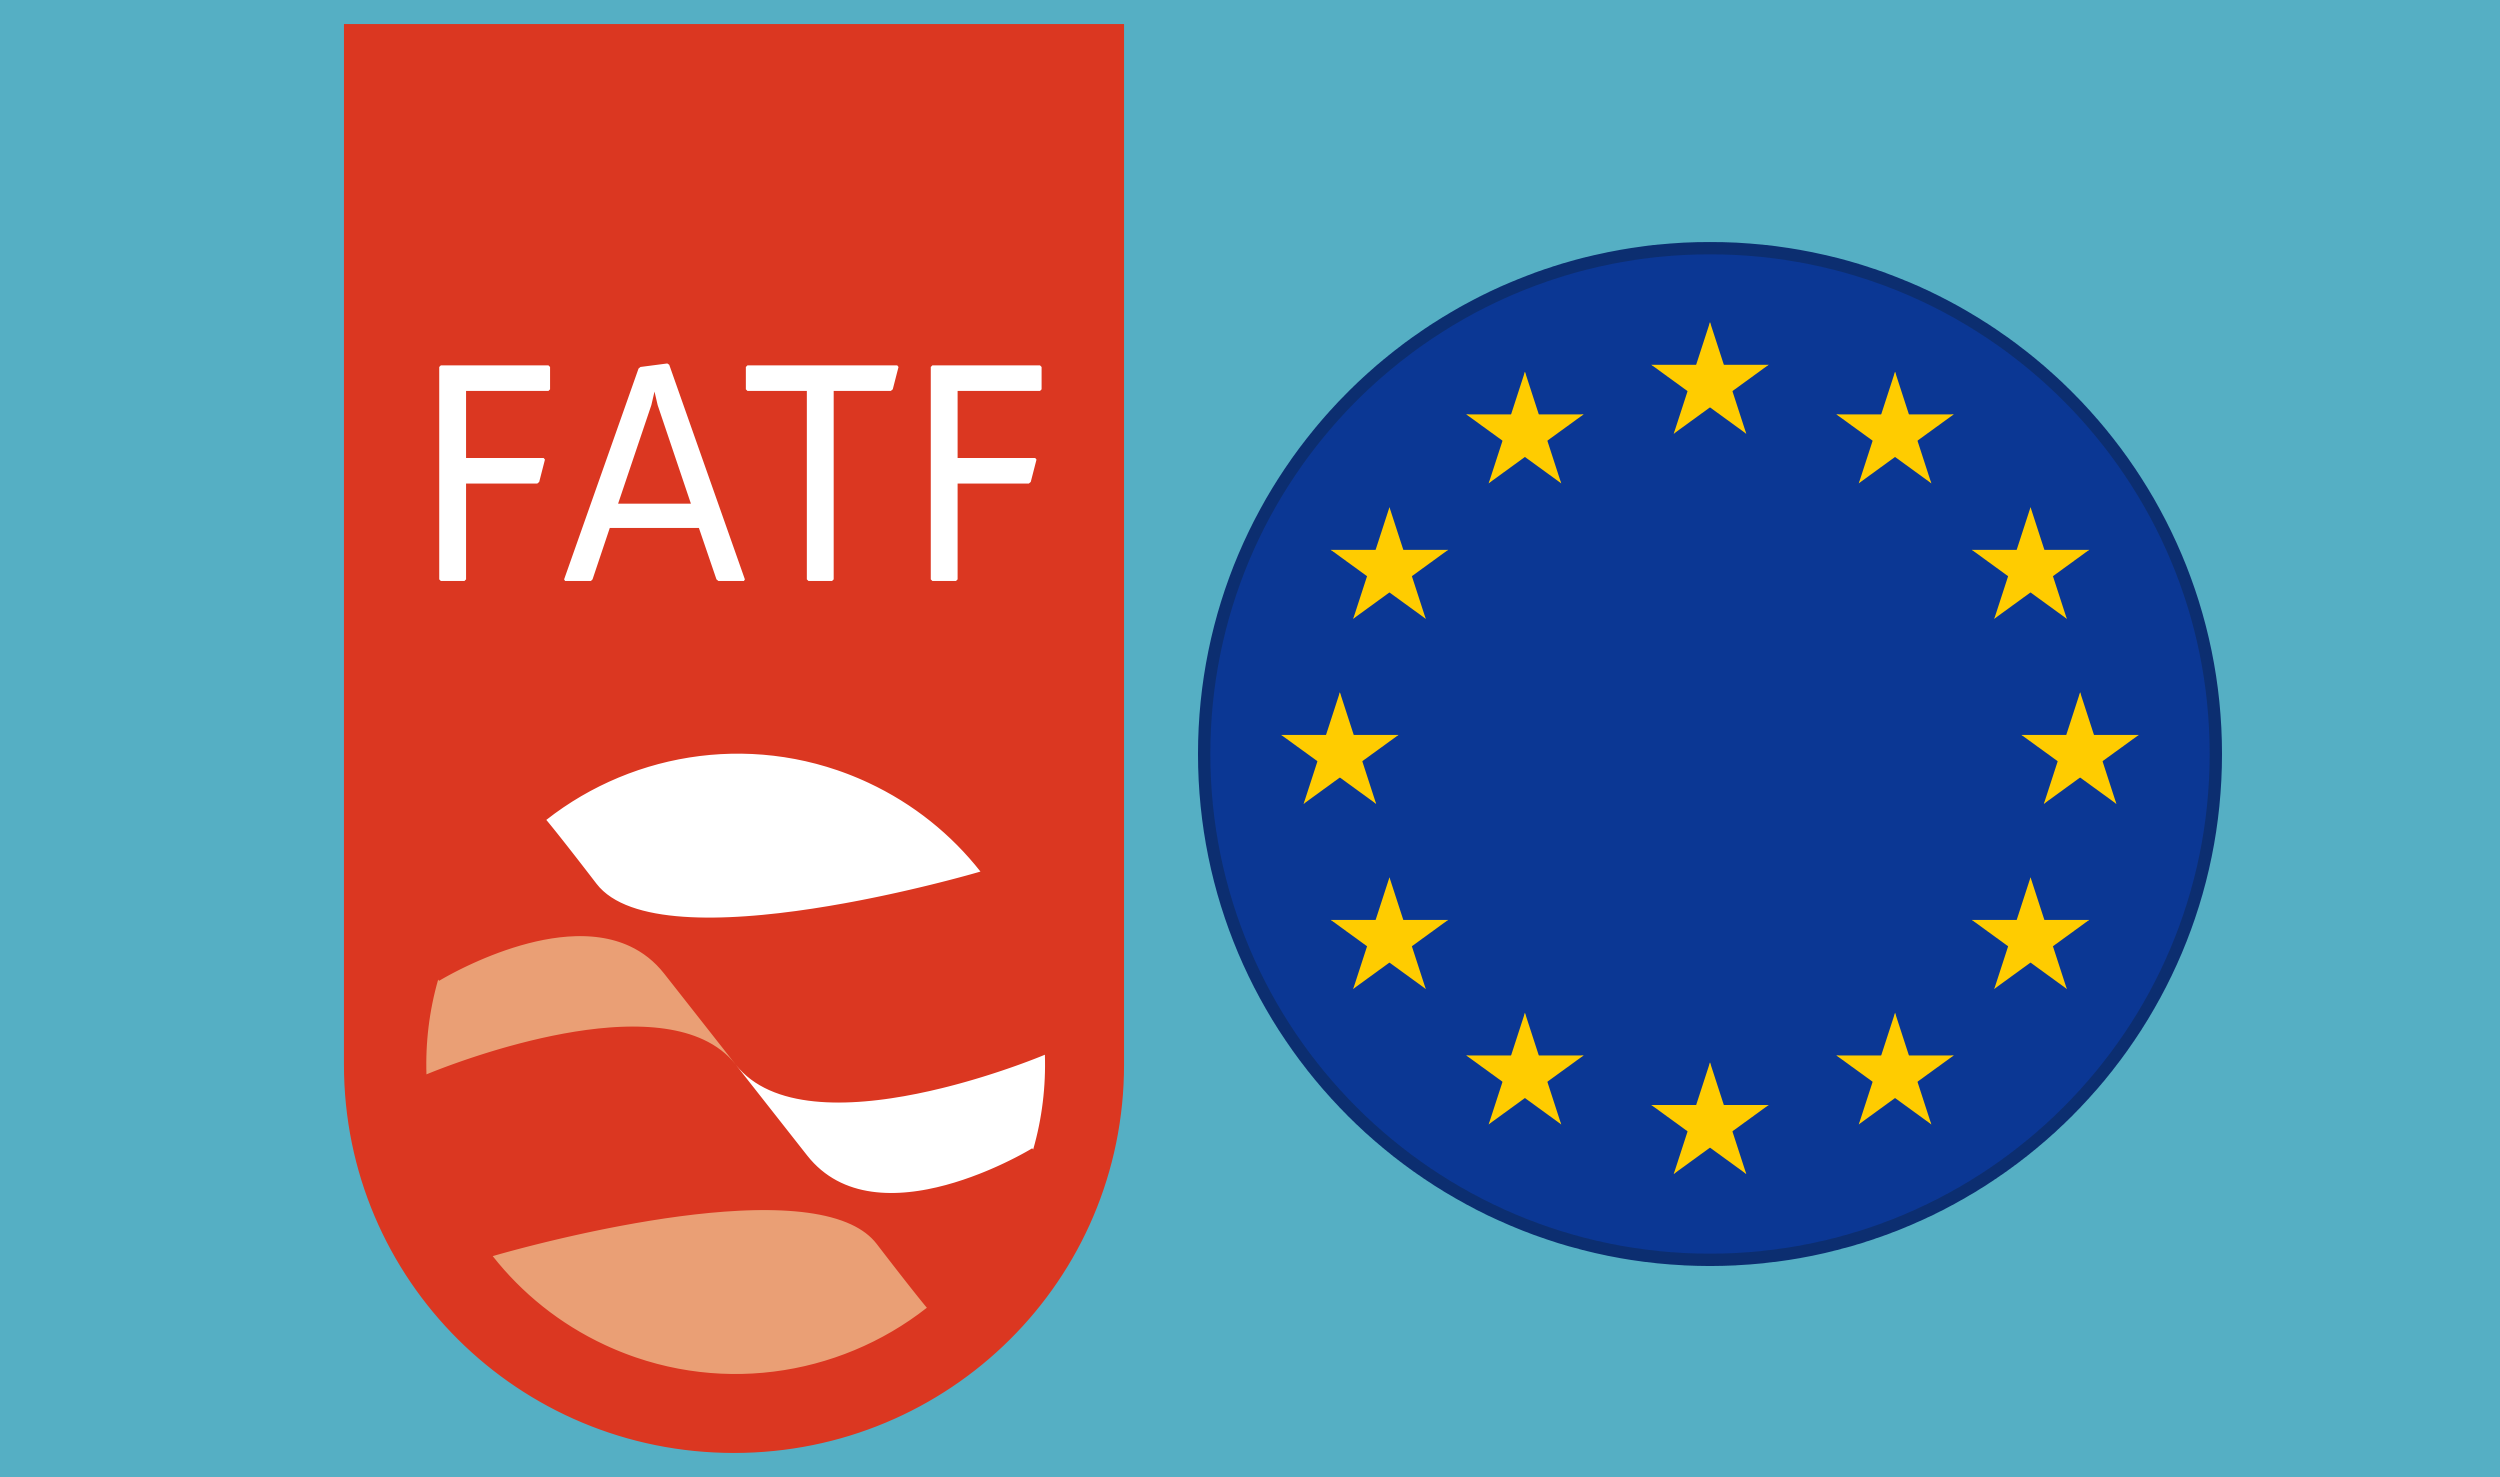 FATF says EU dirty money list risks undermining its work